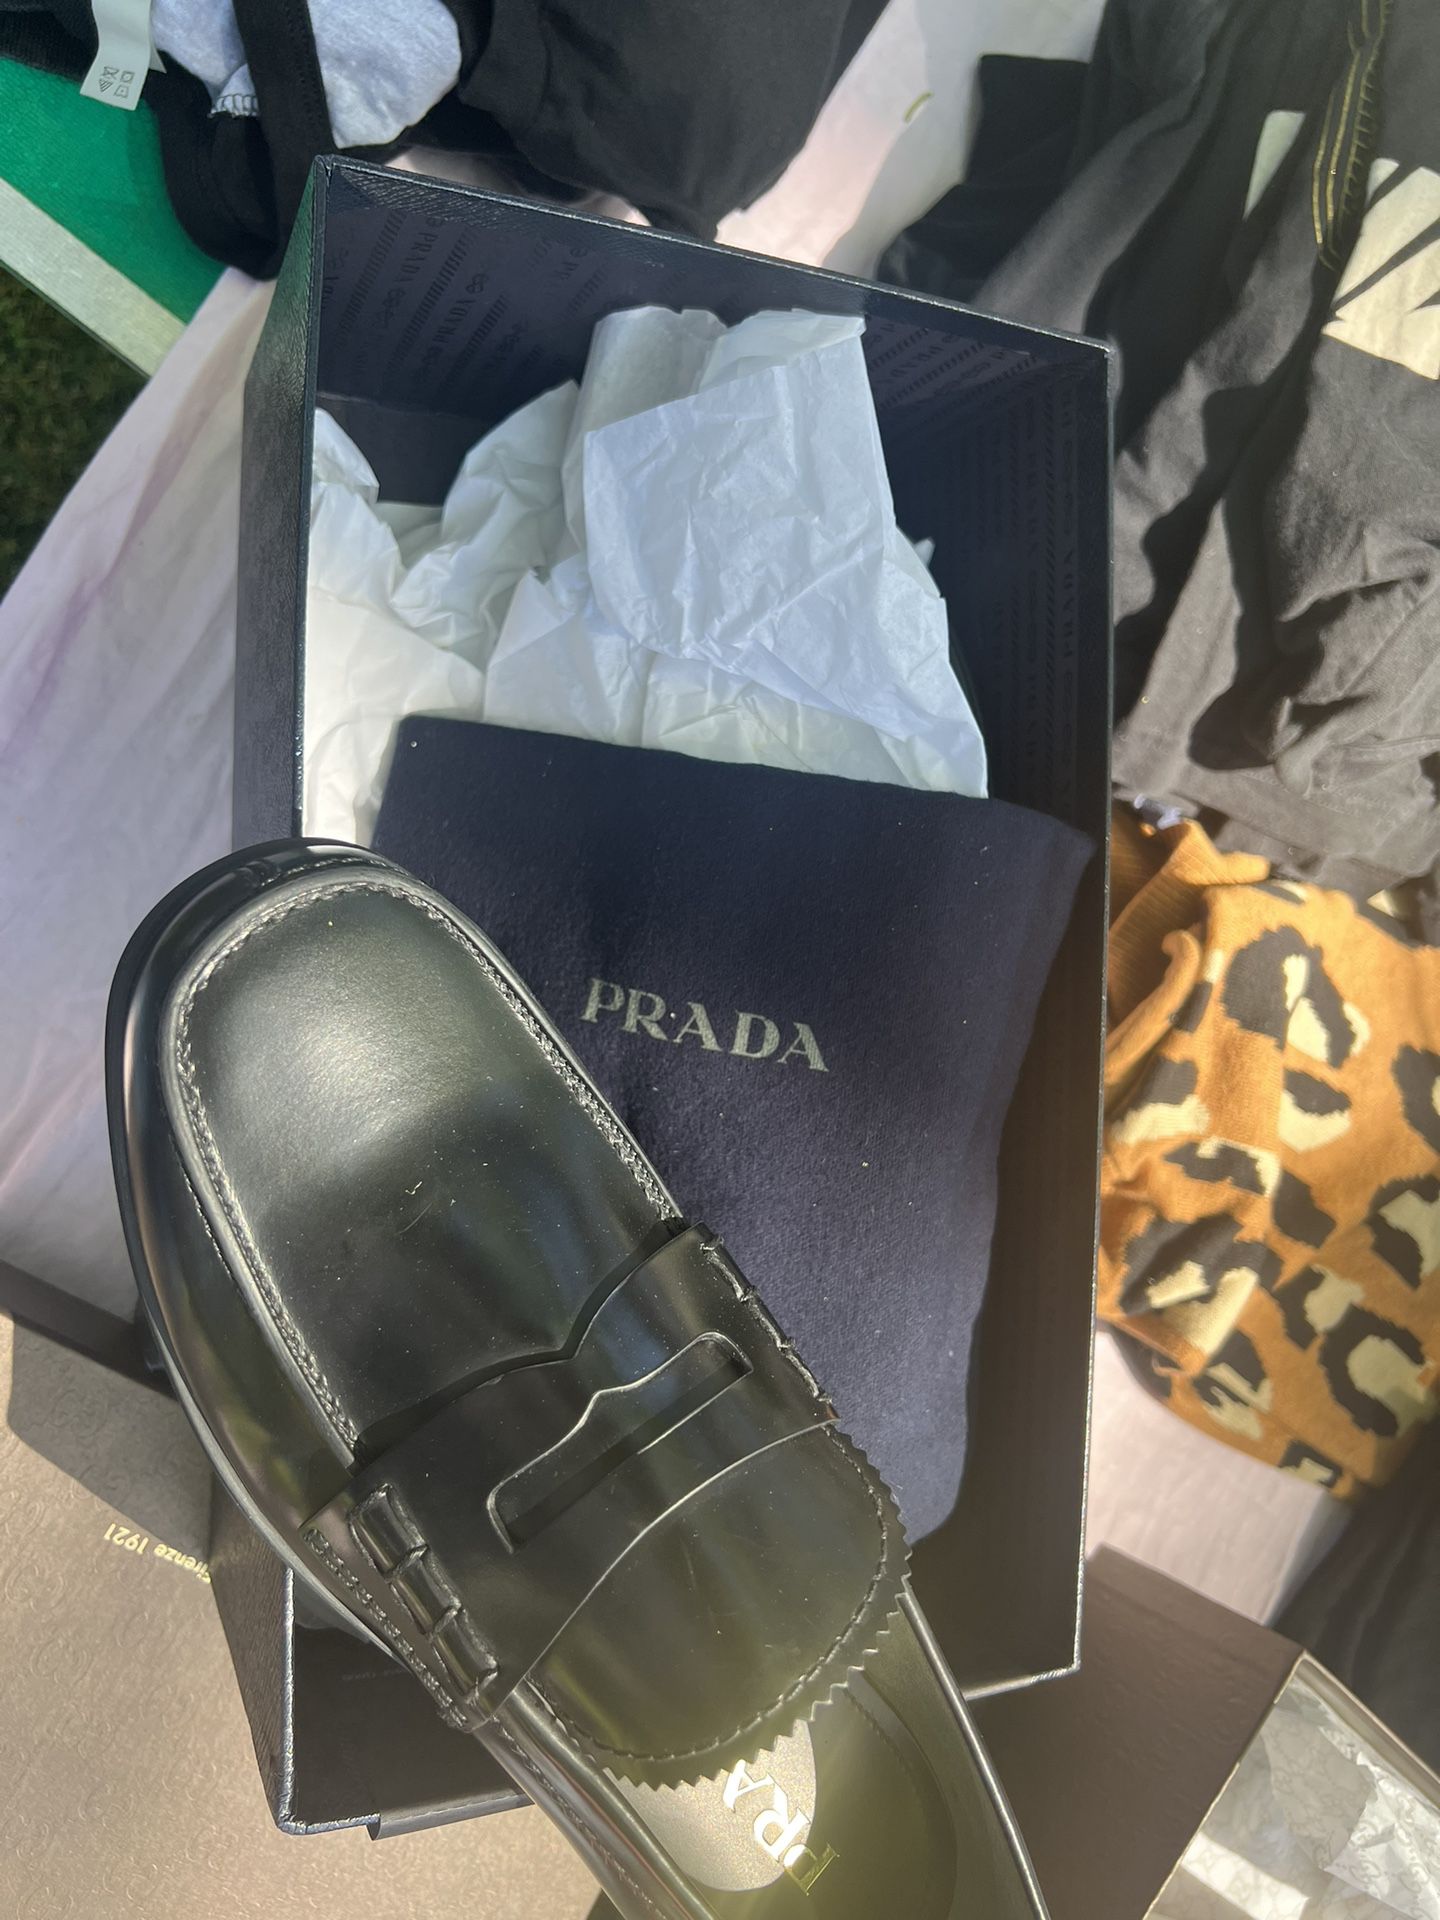 NEW Italian PRADA loafers $350 